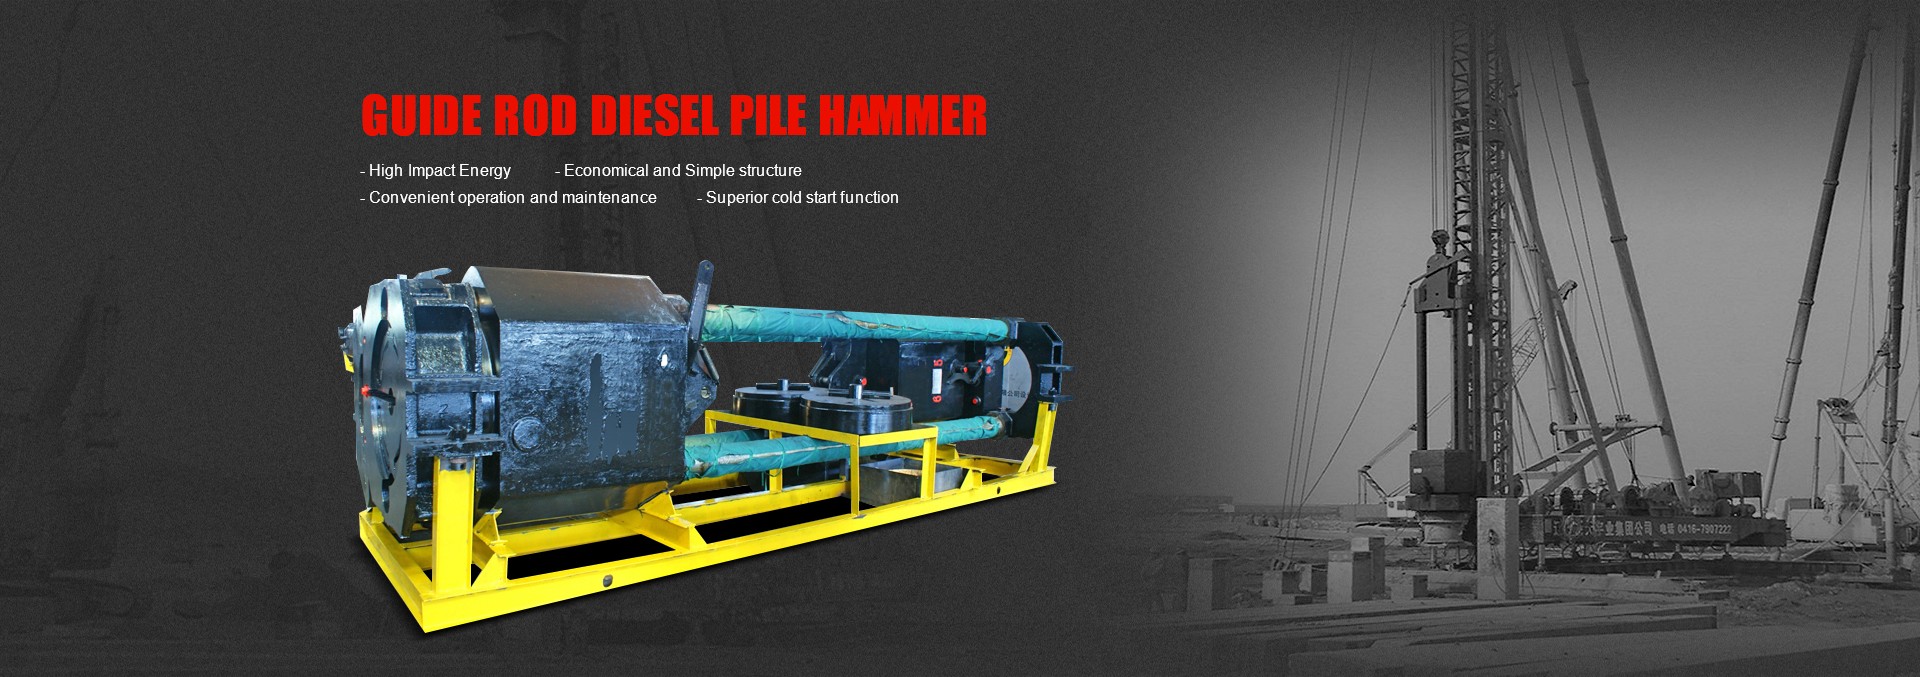 Patnubay Rod Diesel Pile Hammer